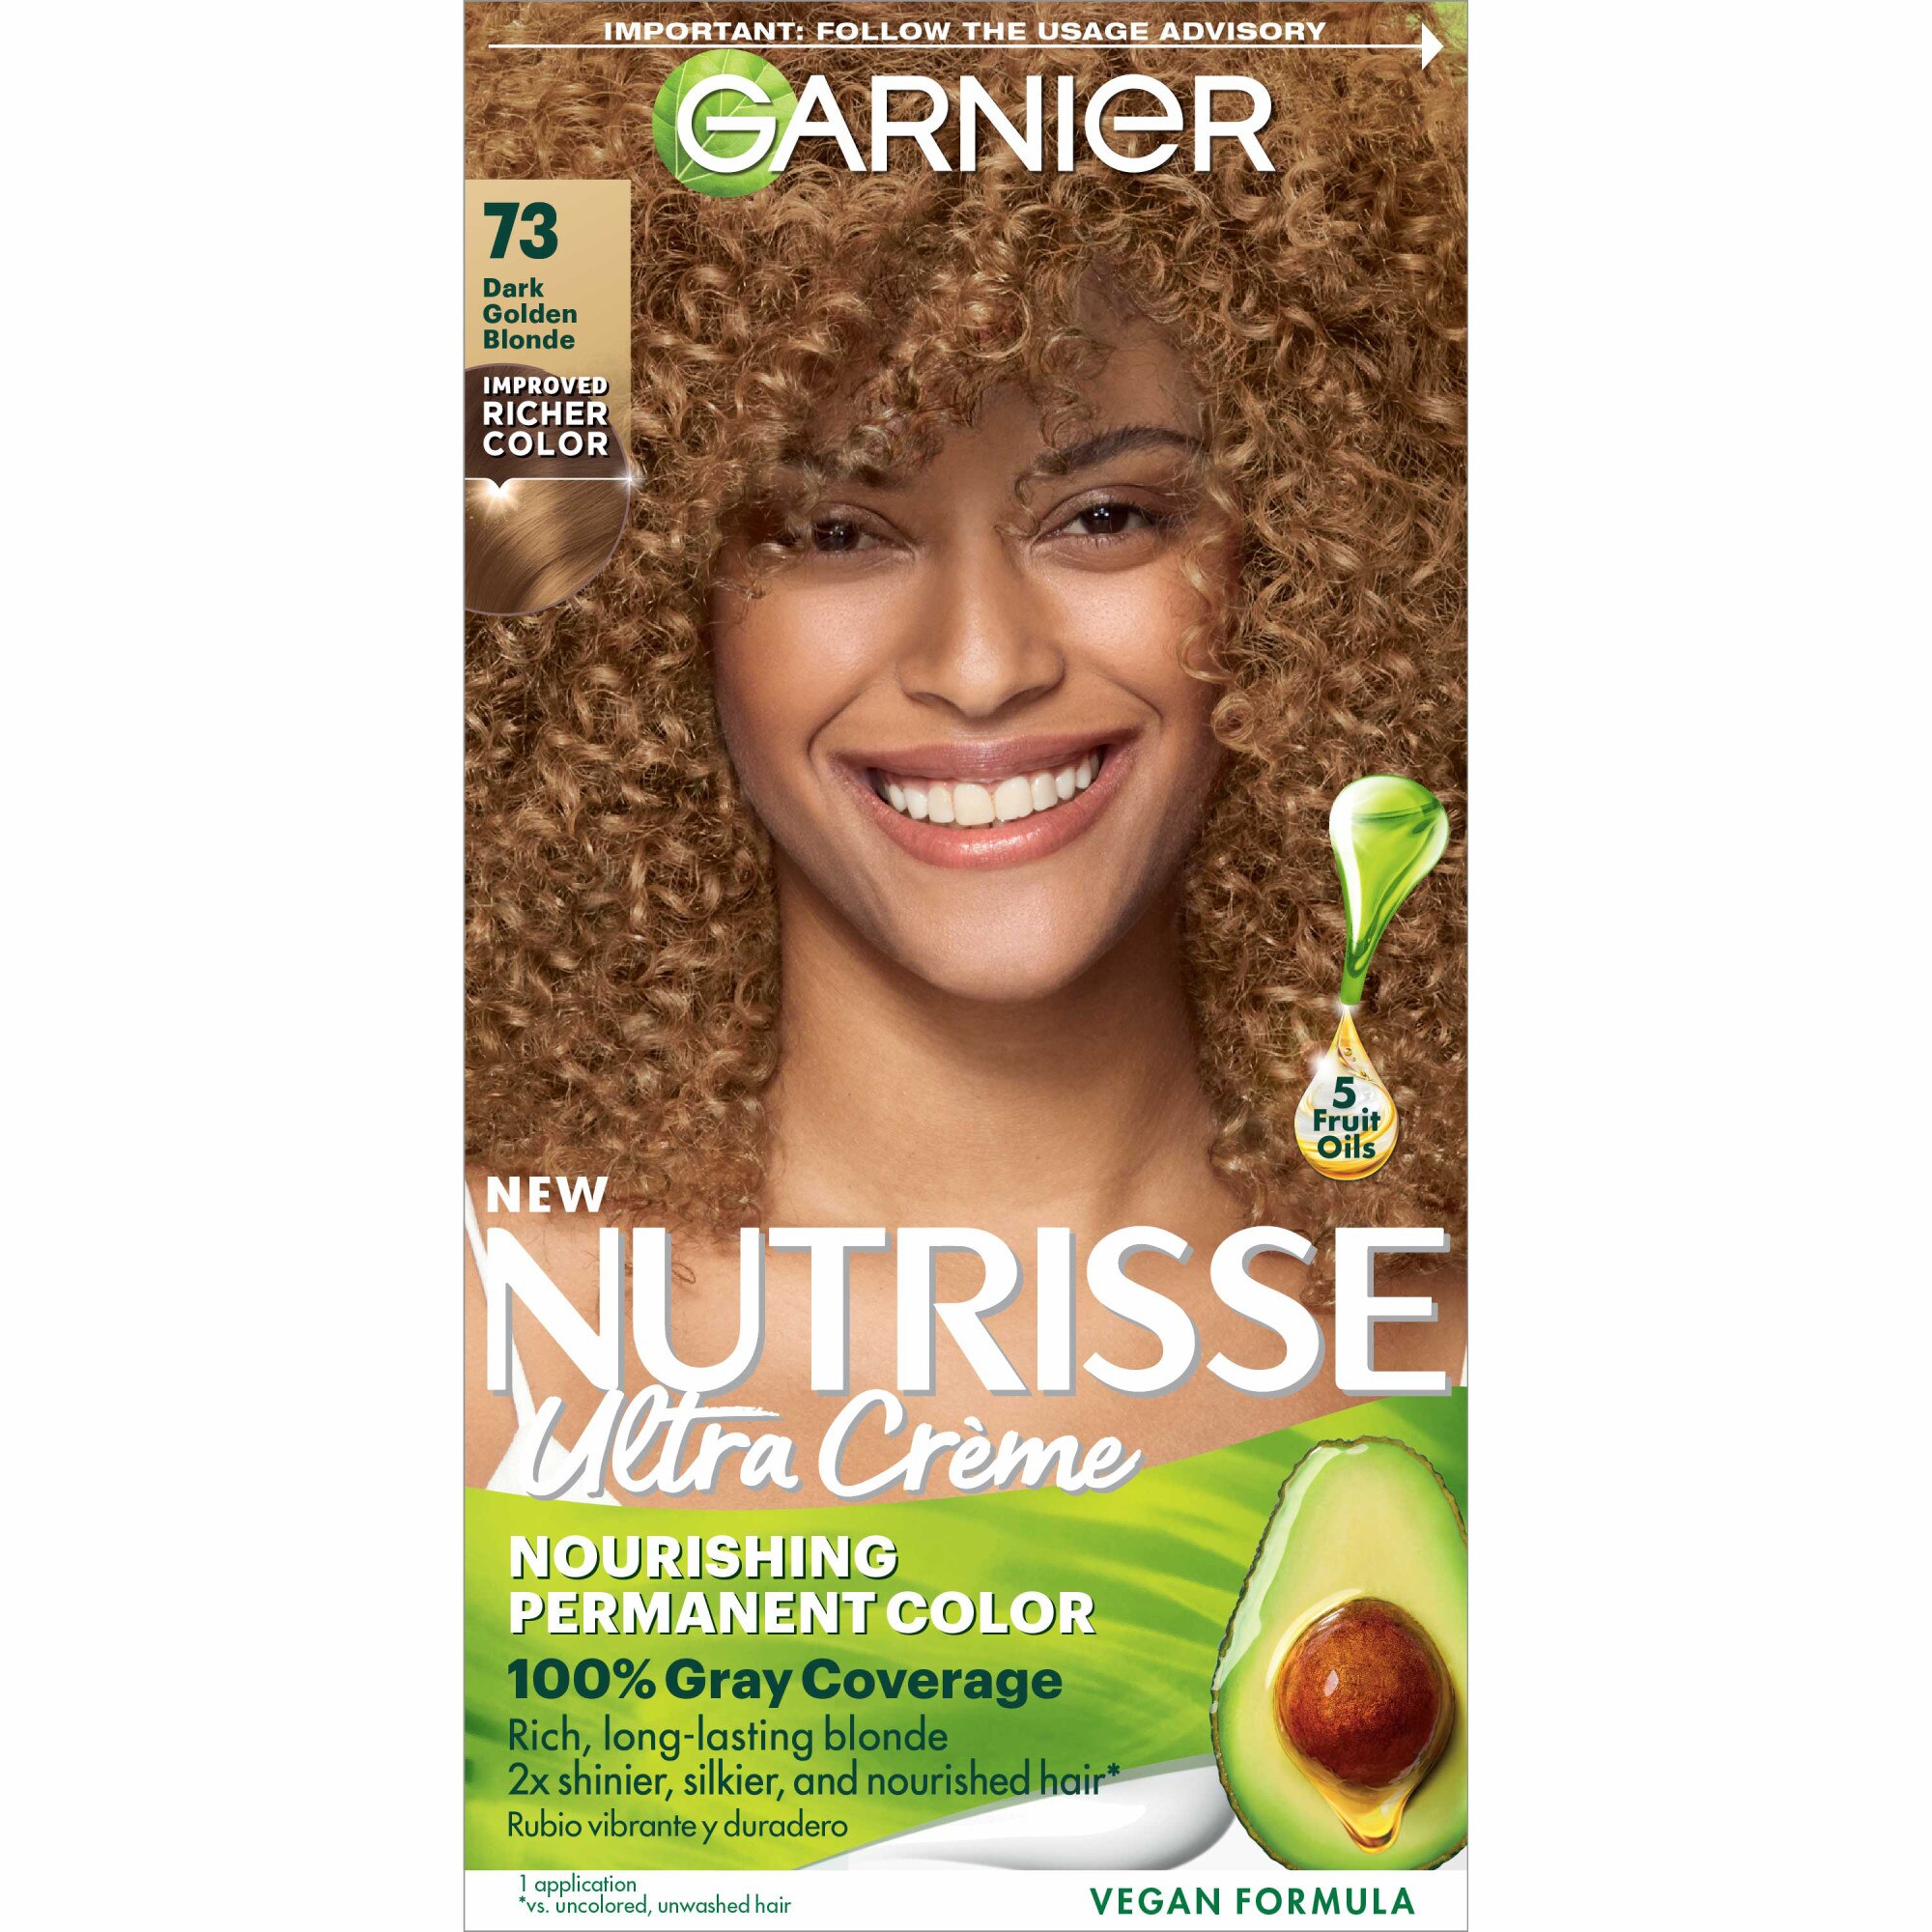 Garnier Nutrisse Nourishing Permanent Hair Color Creme, 73 Dark Golden Blonde , CVS